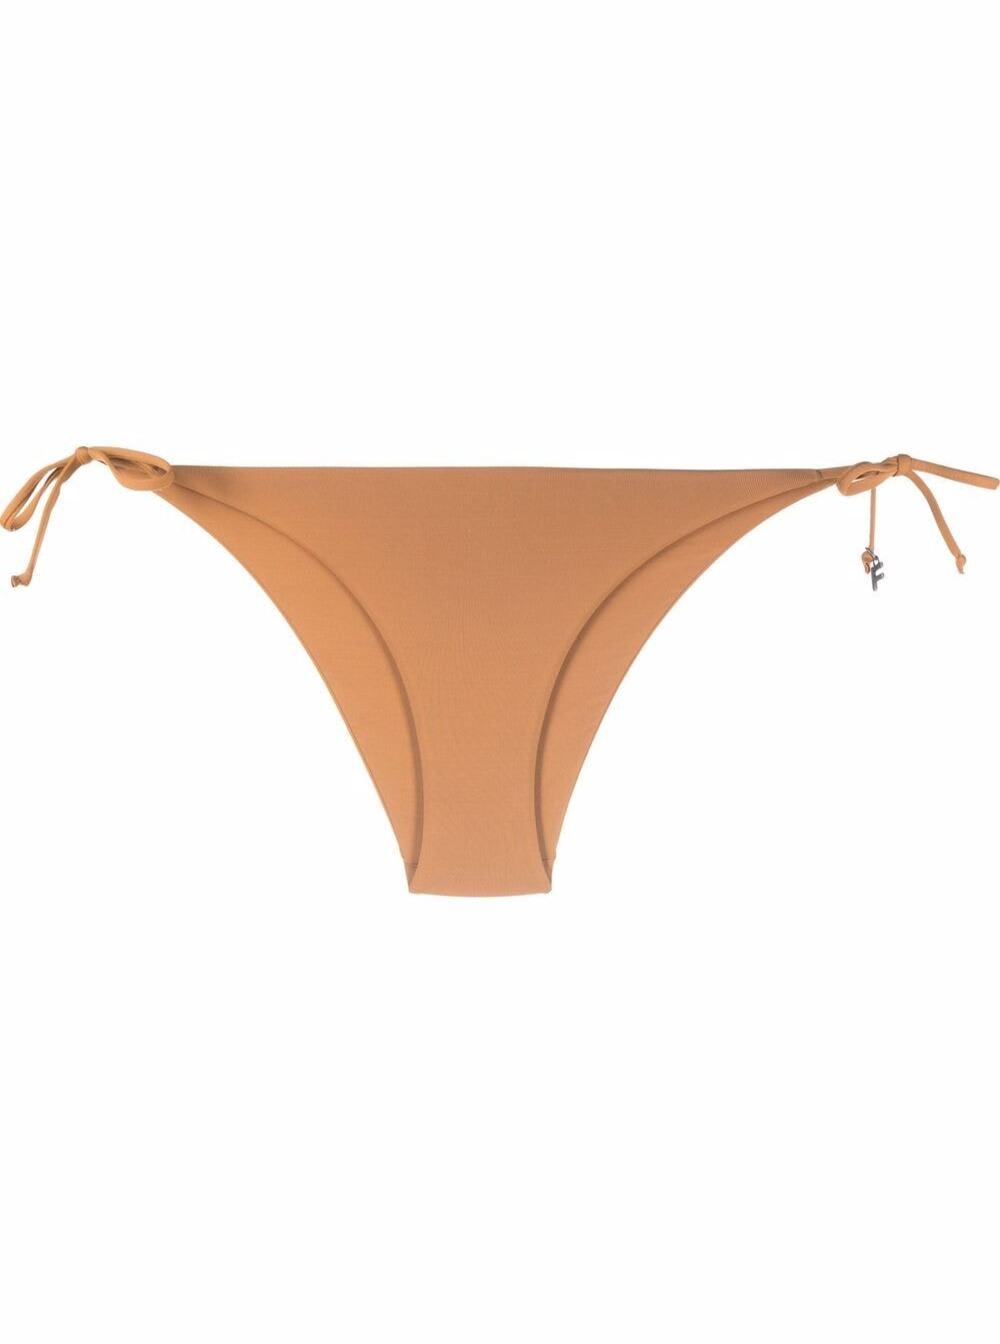 Fisico - Cristina Ferrari Fisico Womans Camel Ribbed Fabric Bikini Bottom